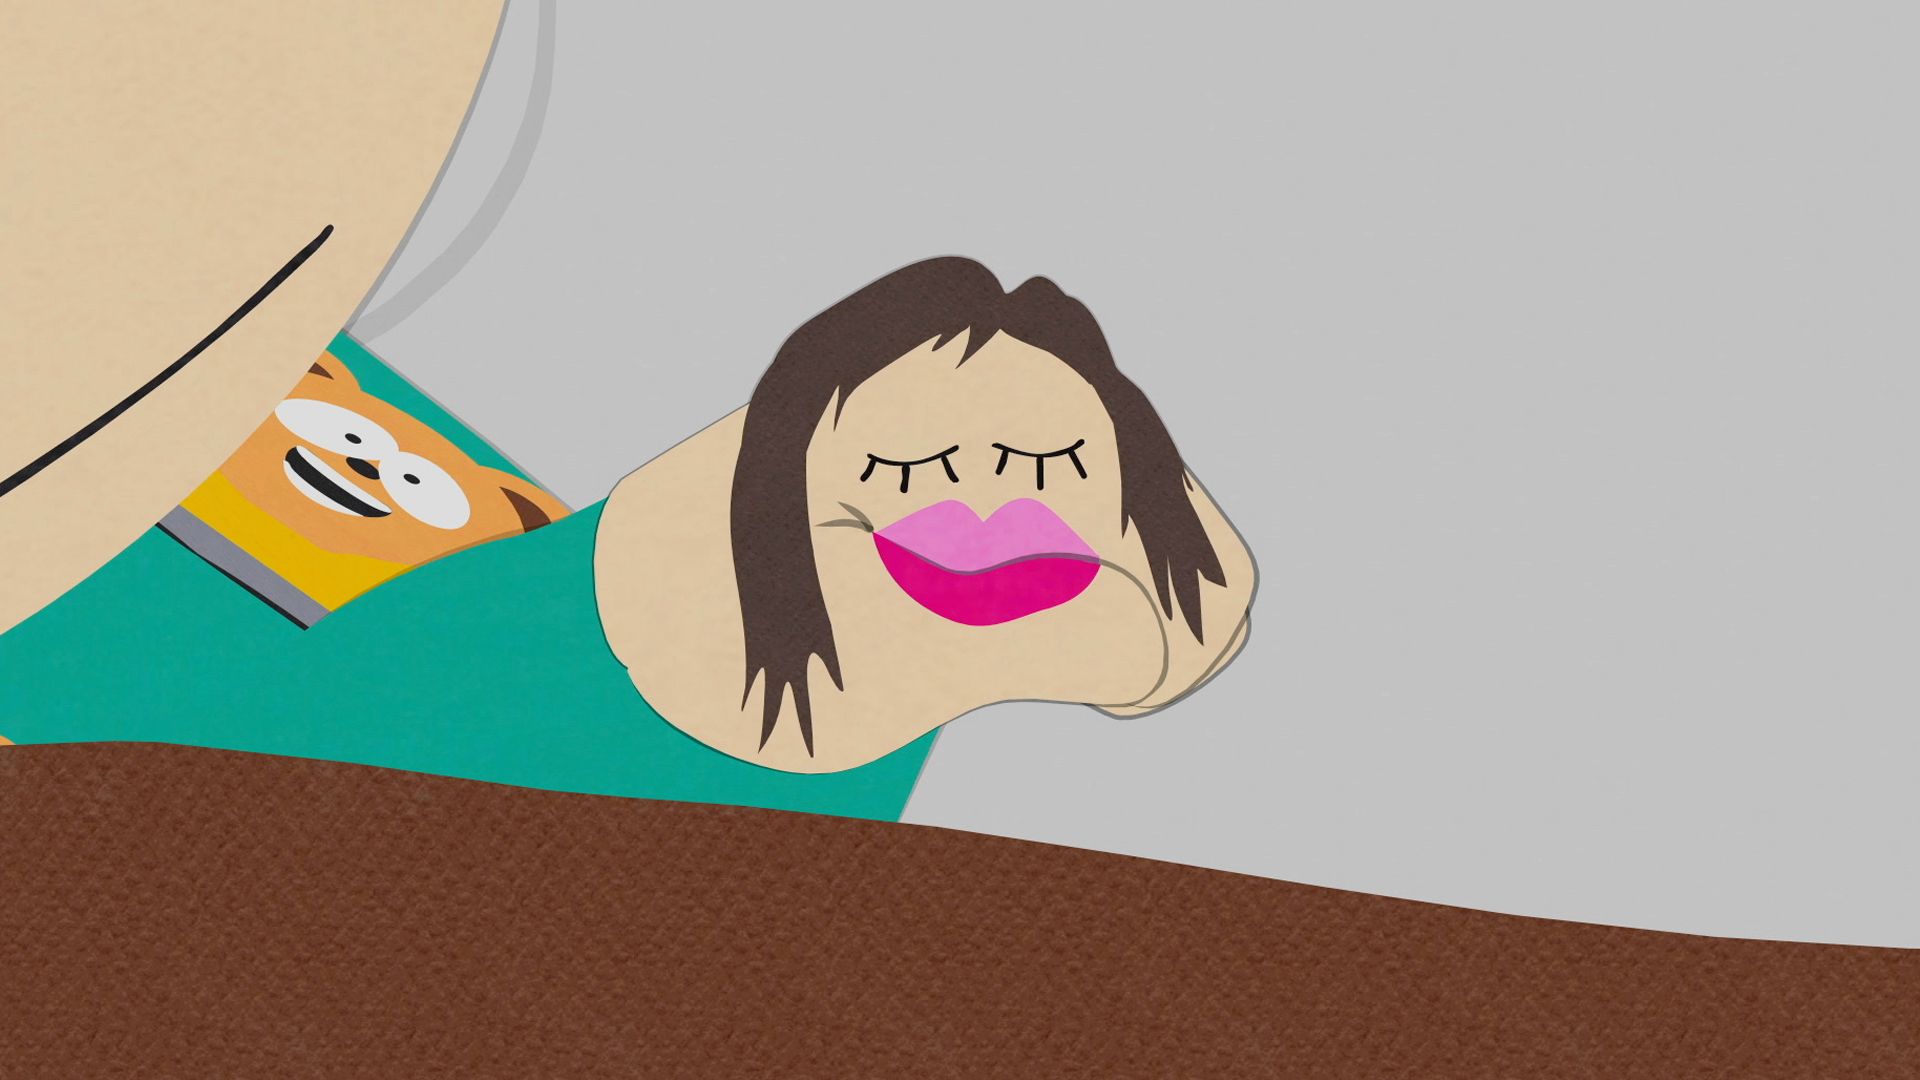 Ms. Lopez Gets Signed - Season 7 Episode 5 - South Park